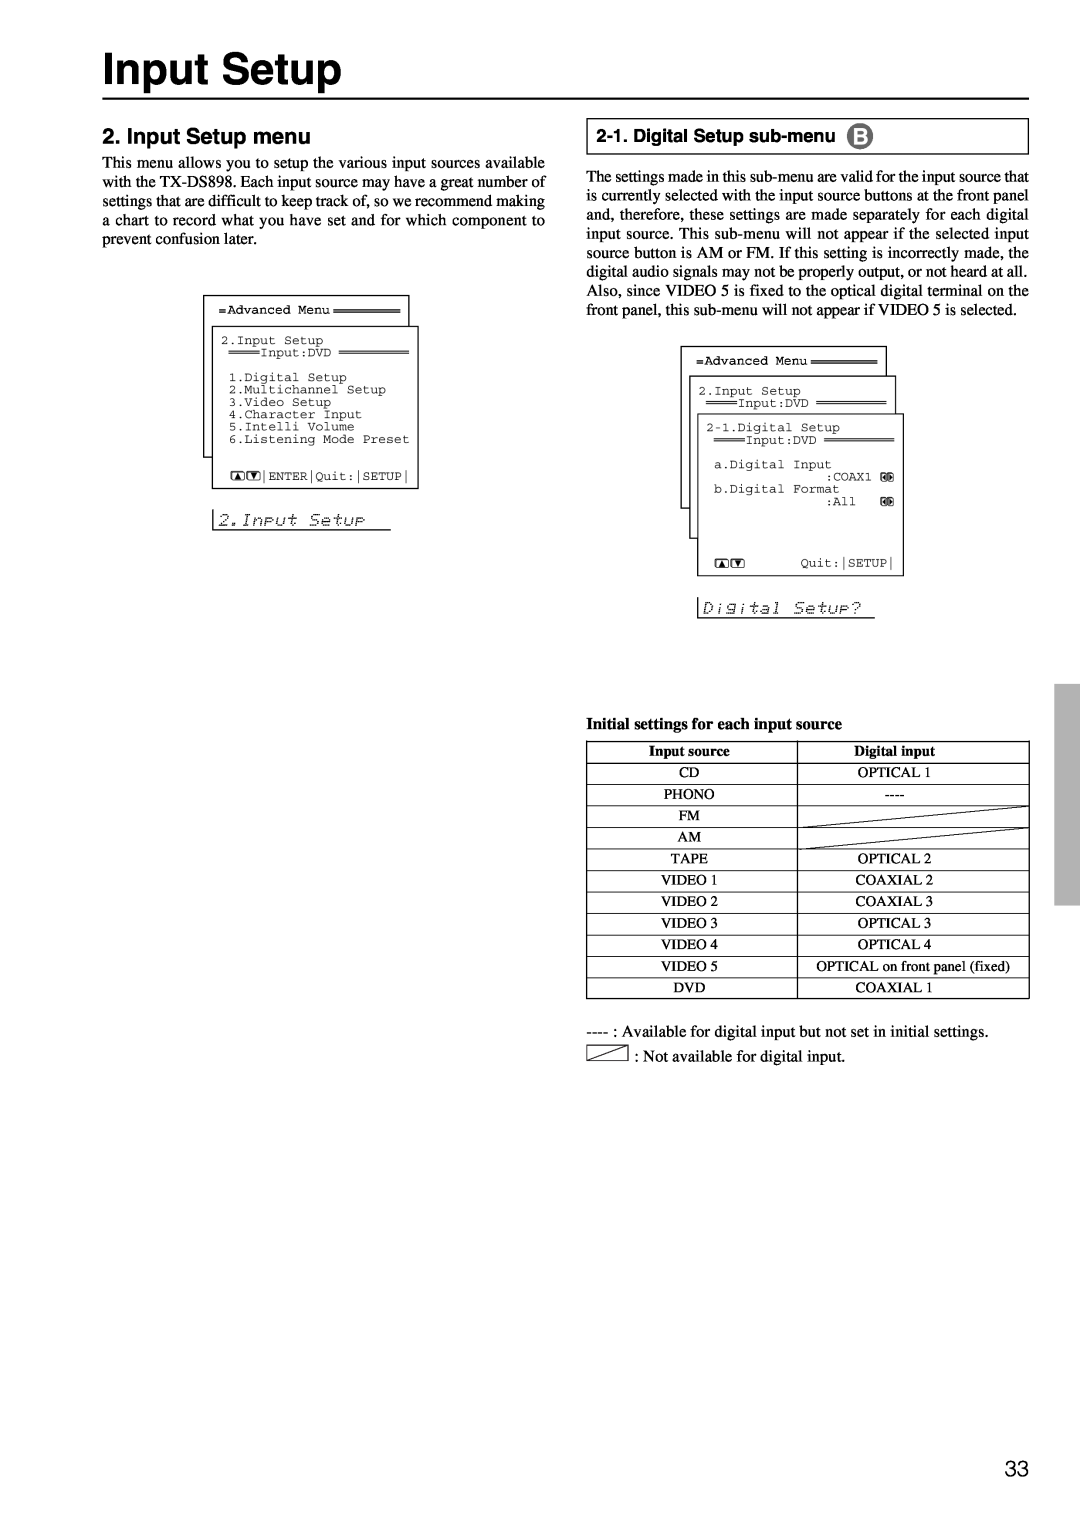 Onkyo TX-DS898 instruction manual Input Setup menu, Digital Setup sub-menu 